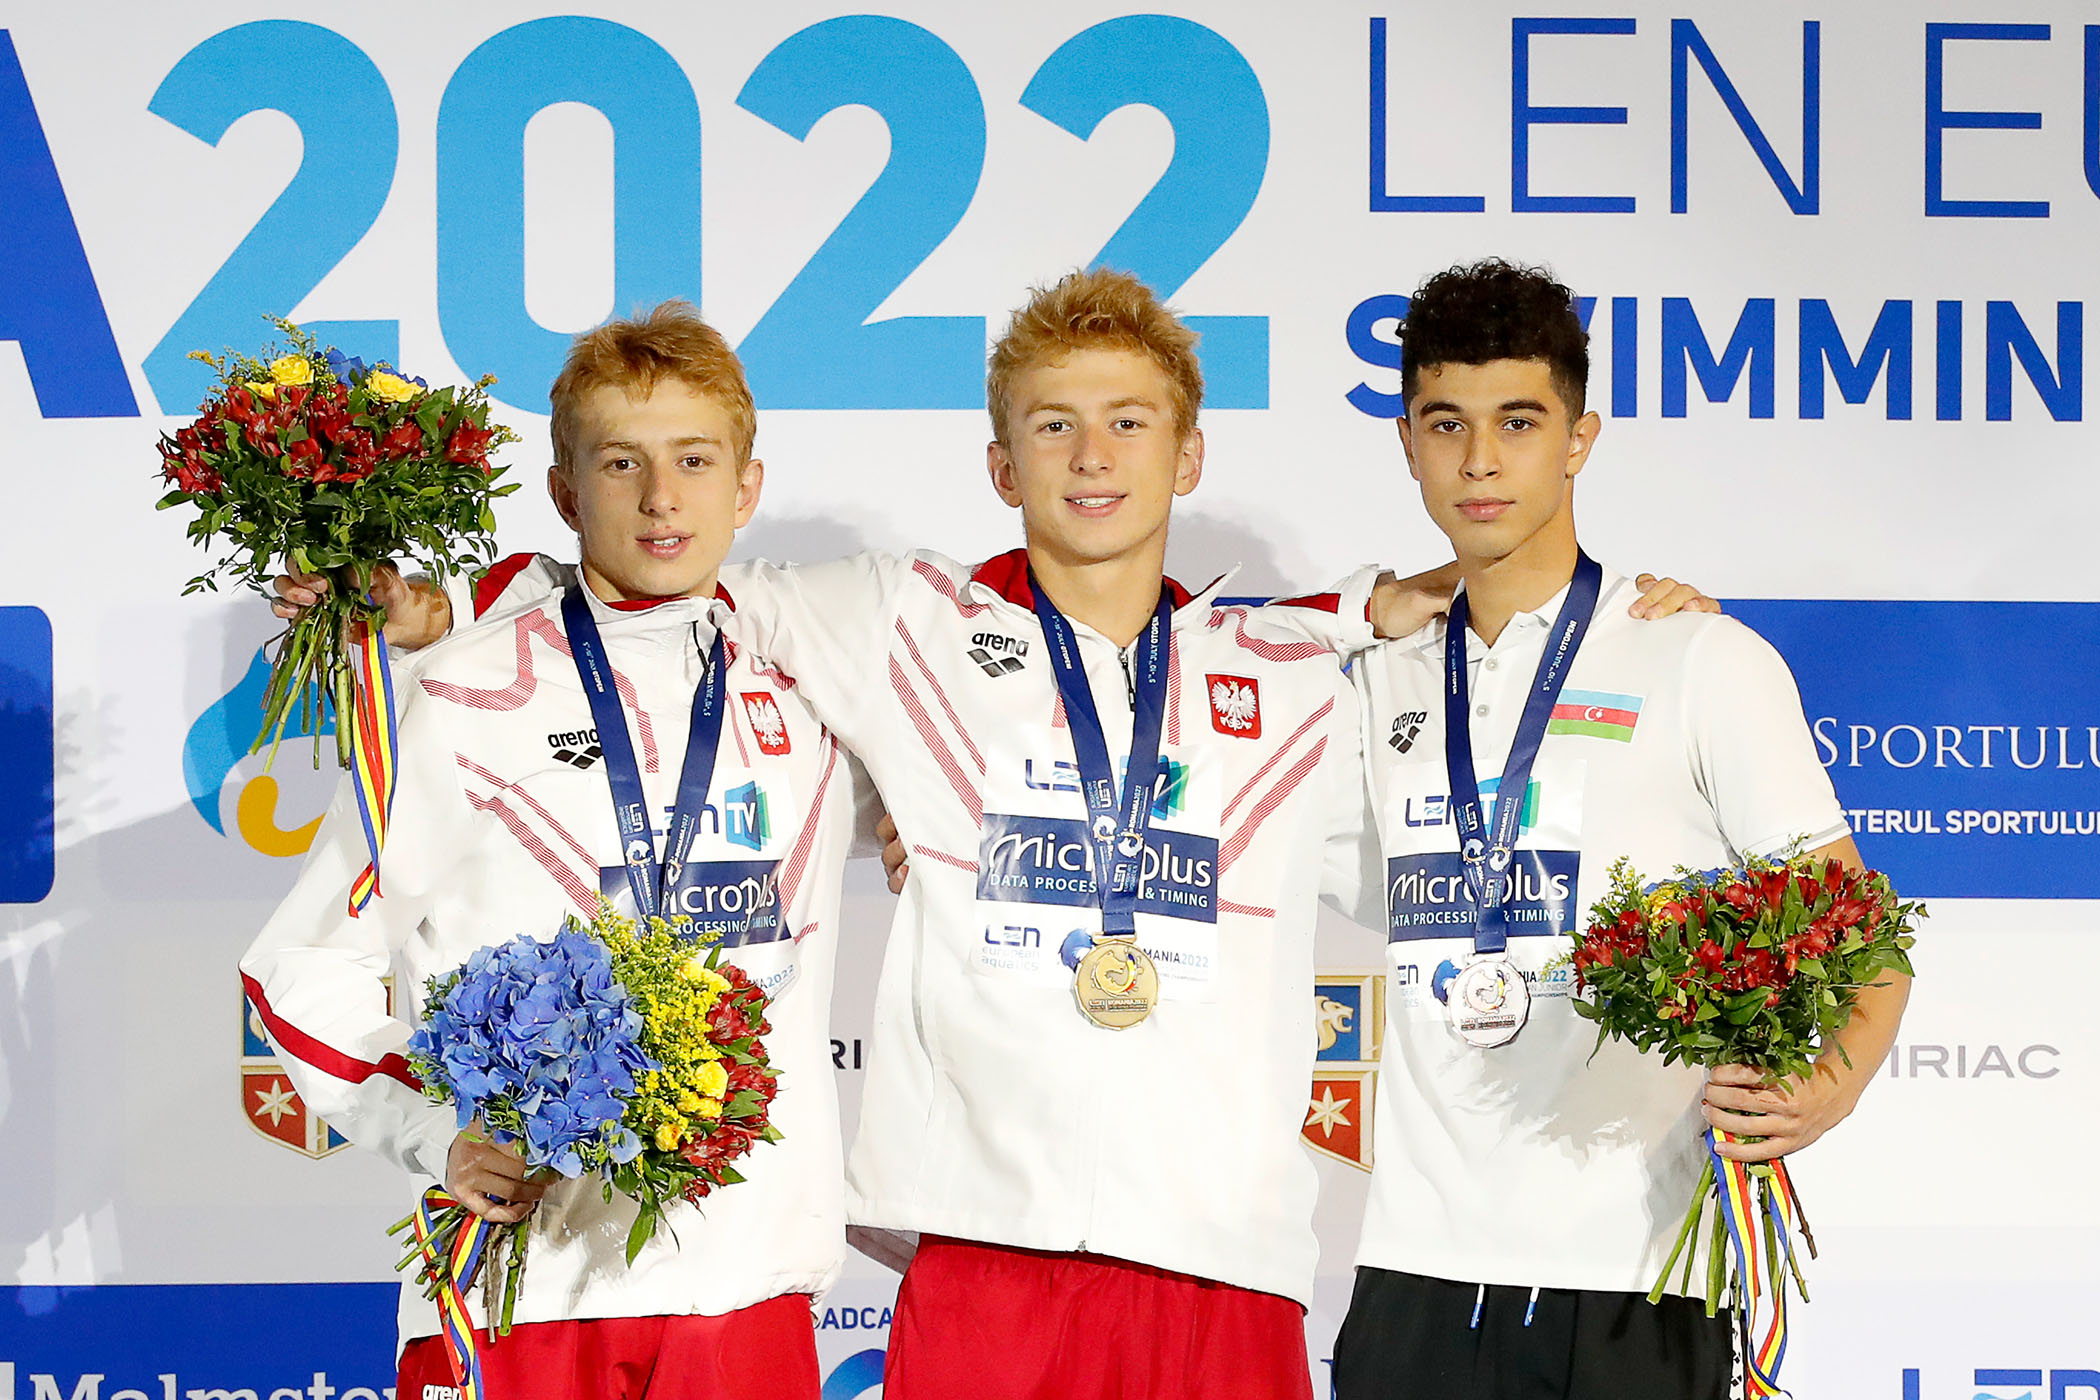 LEN Juniores Swimming European Championship Bucharest 2022